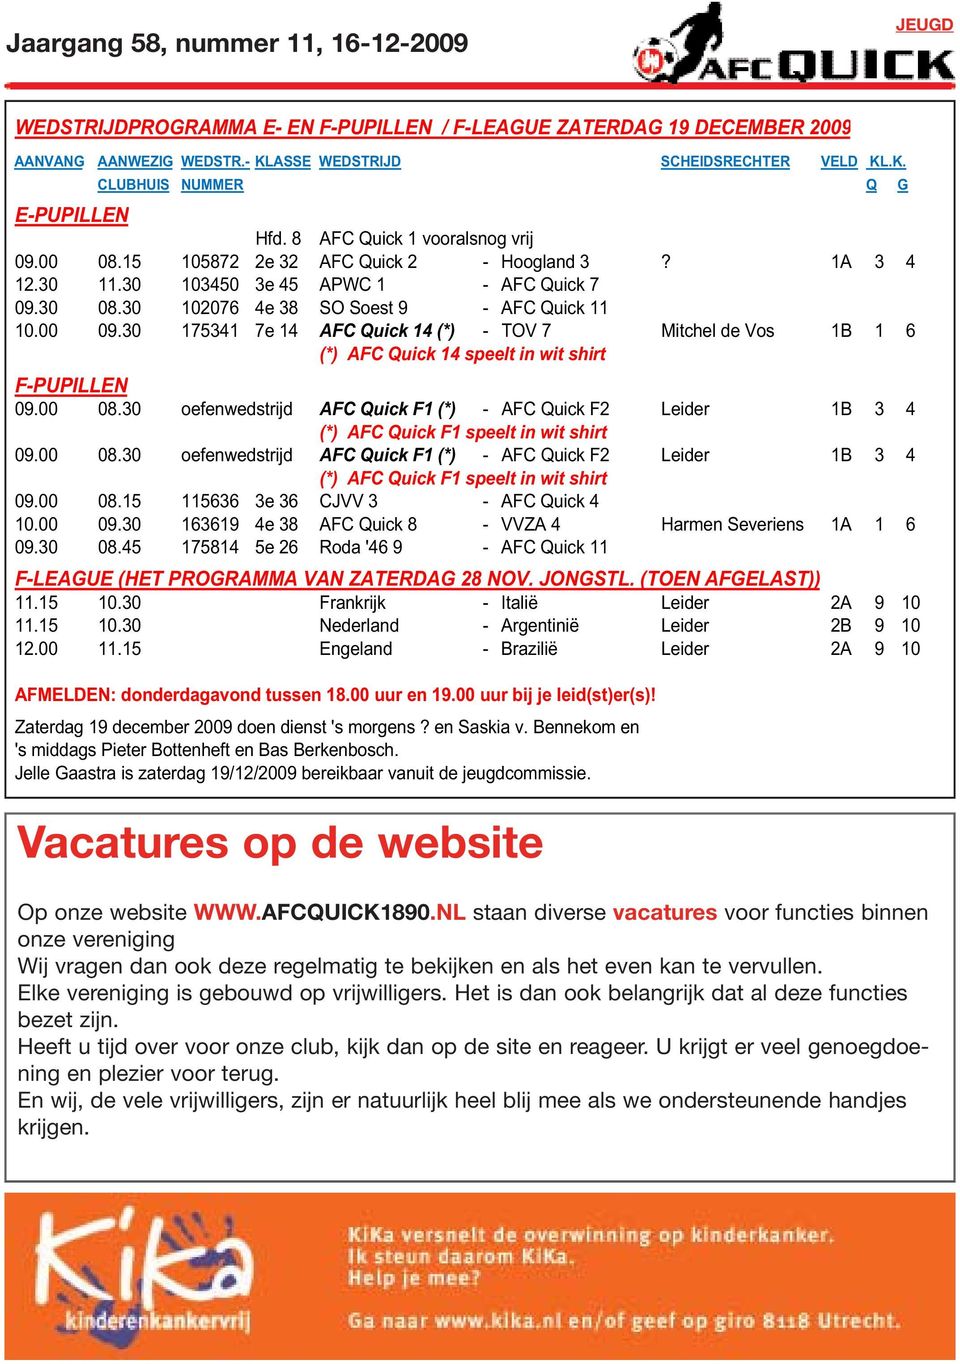 30 175341 7e 14 AFC Quick 14 (*) - TOV 7 Mitchel de Vos 1B 1 6 (*) AFC Quick 14 speelt in wit shirt F-PUPILLEN 09.00 08.